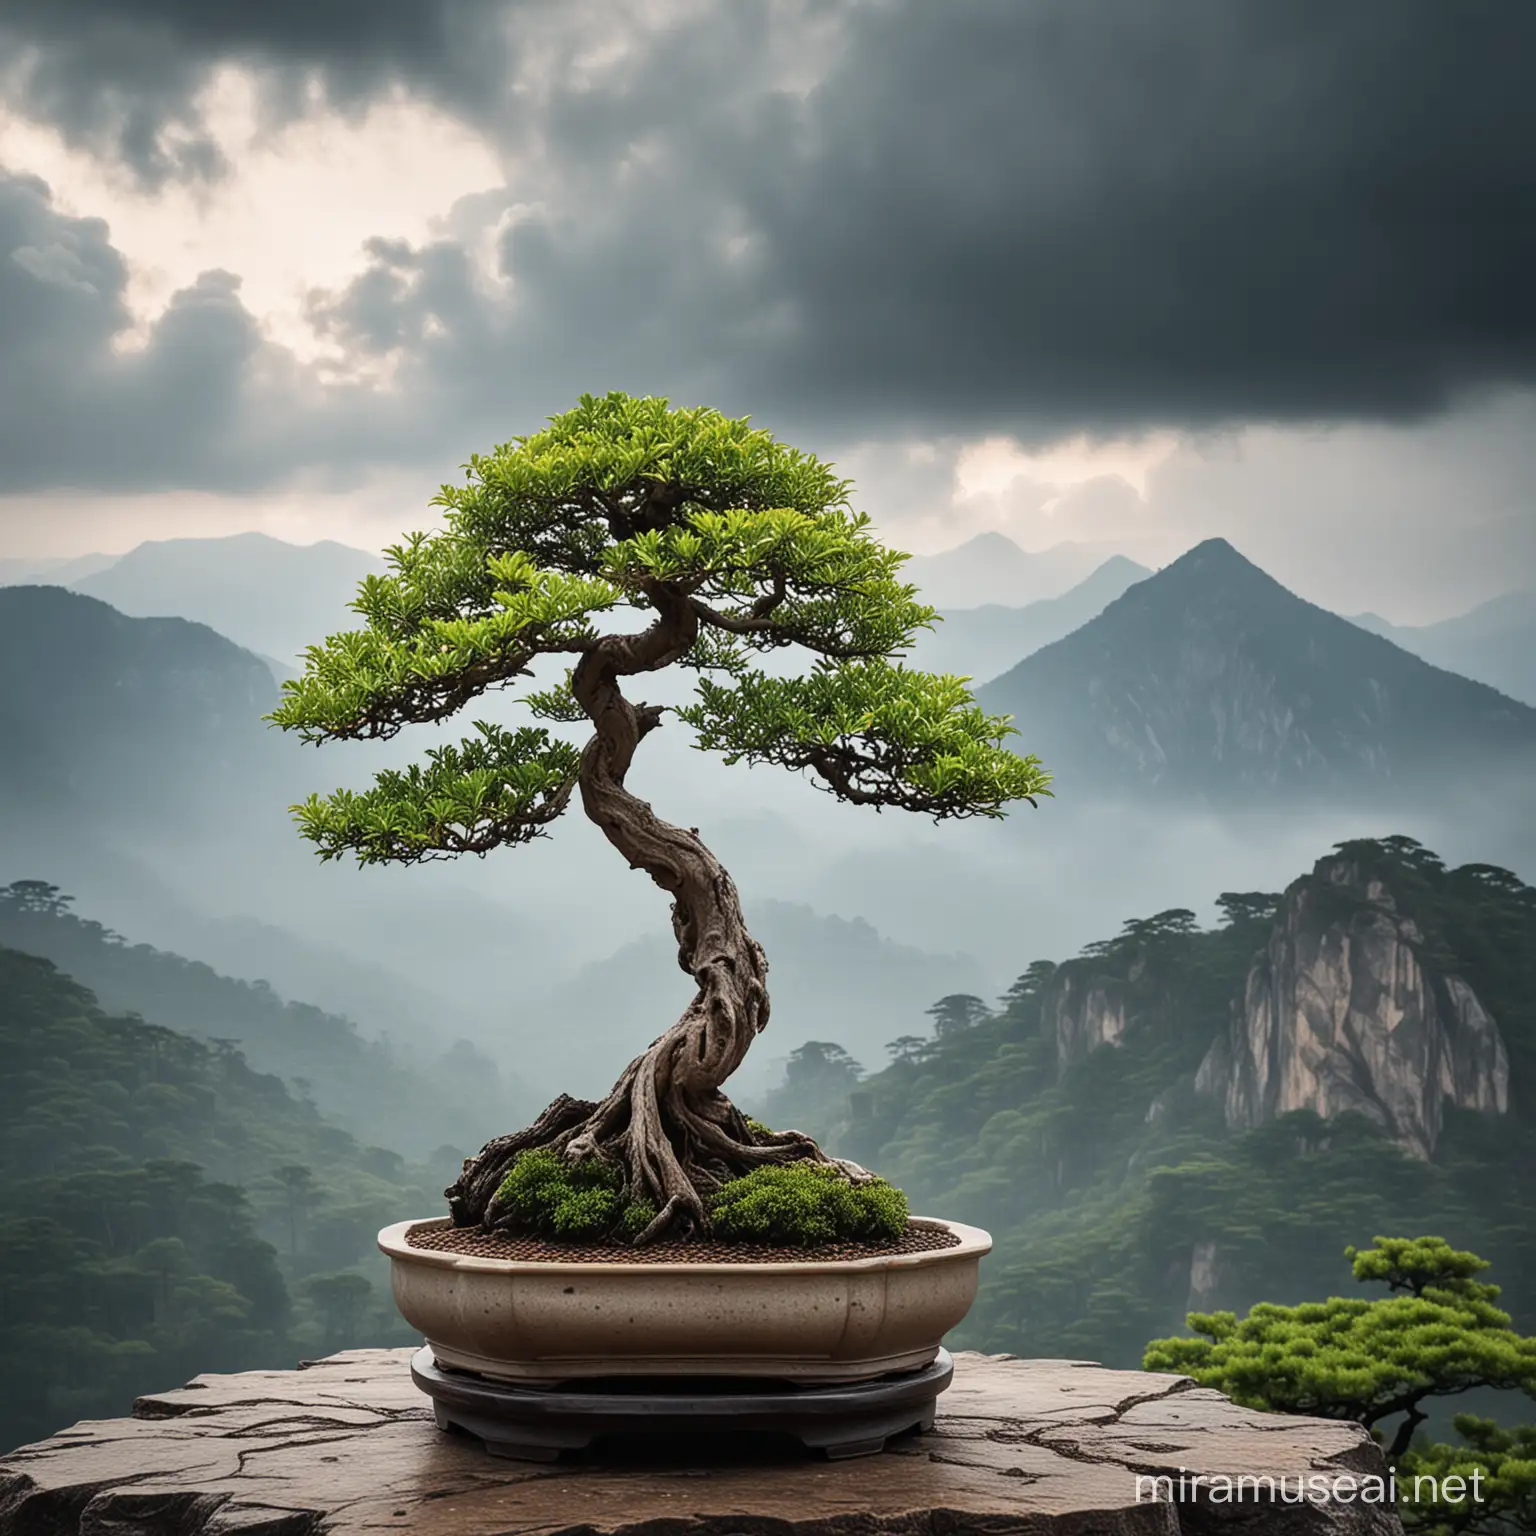 Mystic Bonsai Tree Against Cloudy Mountain Backdrop